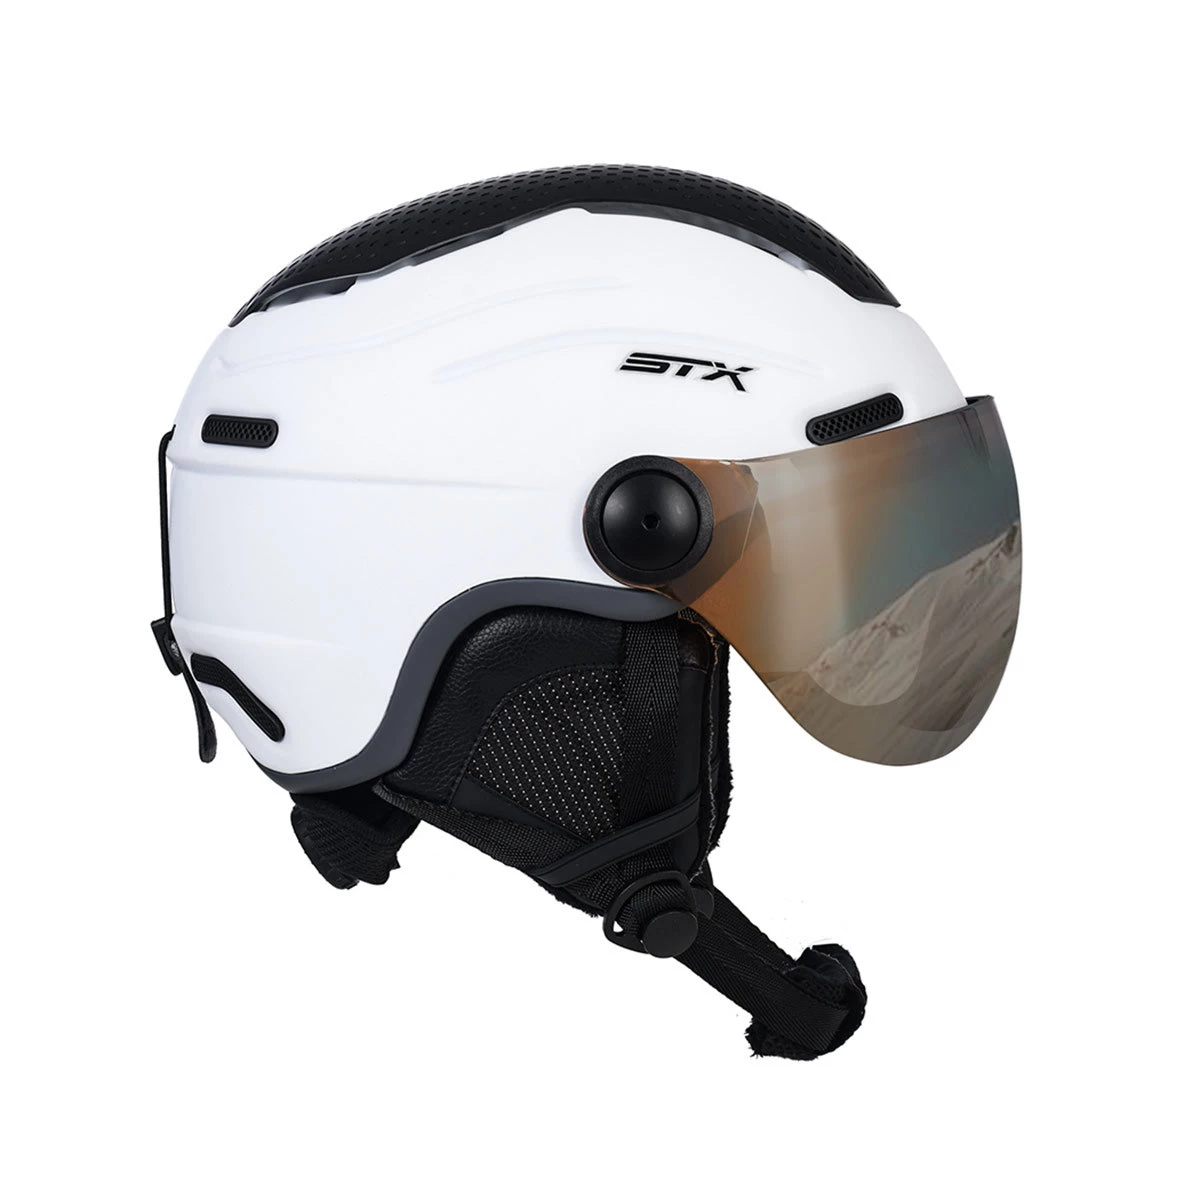 STX Visor Ski Helm - Helmen - Accessoires - Wintersport - Intersport Broek Biggelaar